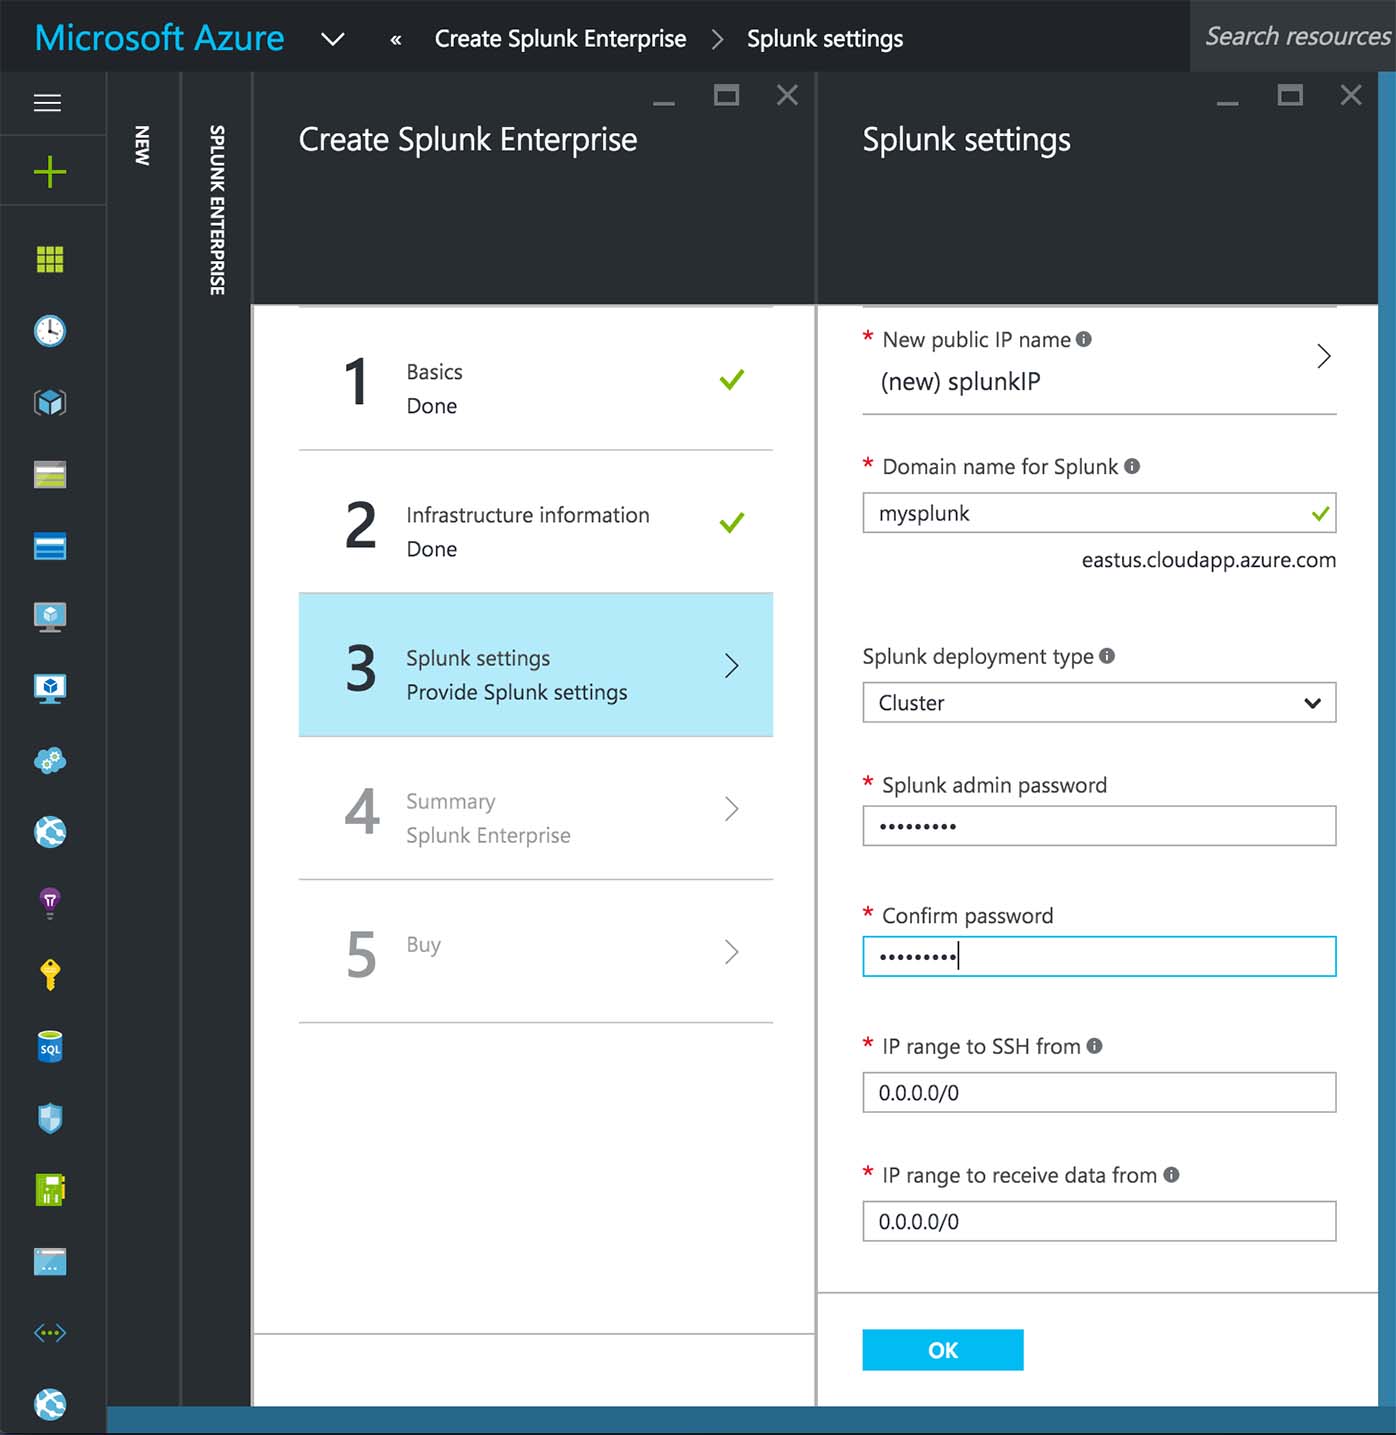 Microsoft Azure Splunk Enterprise settings